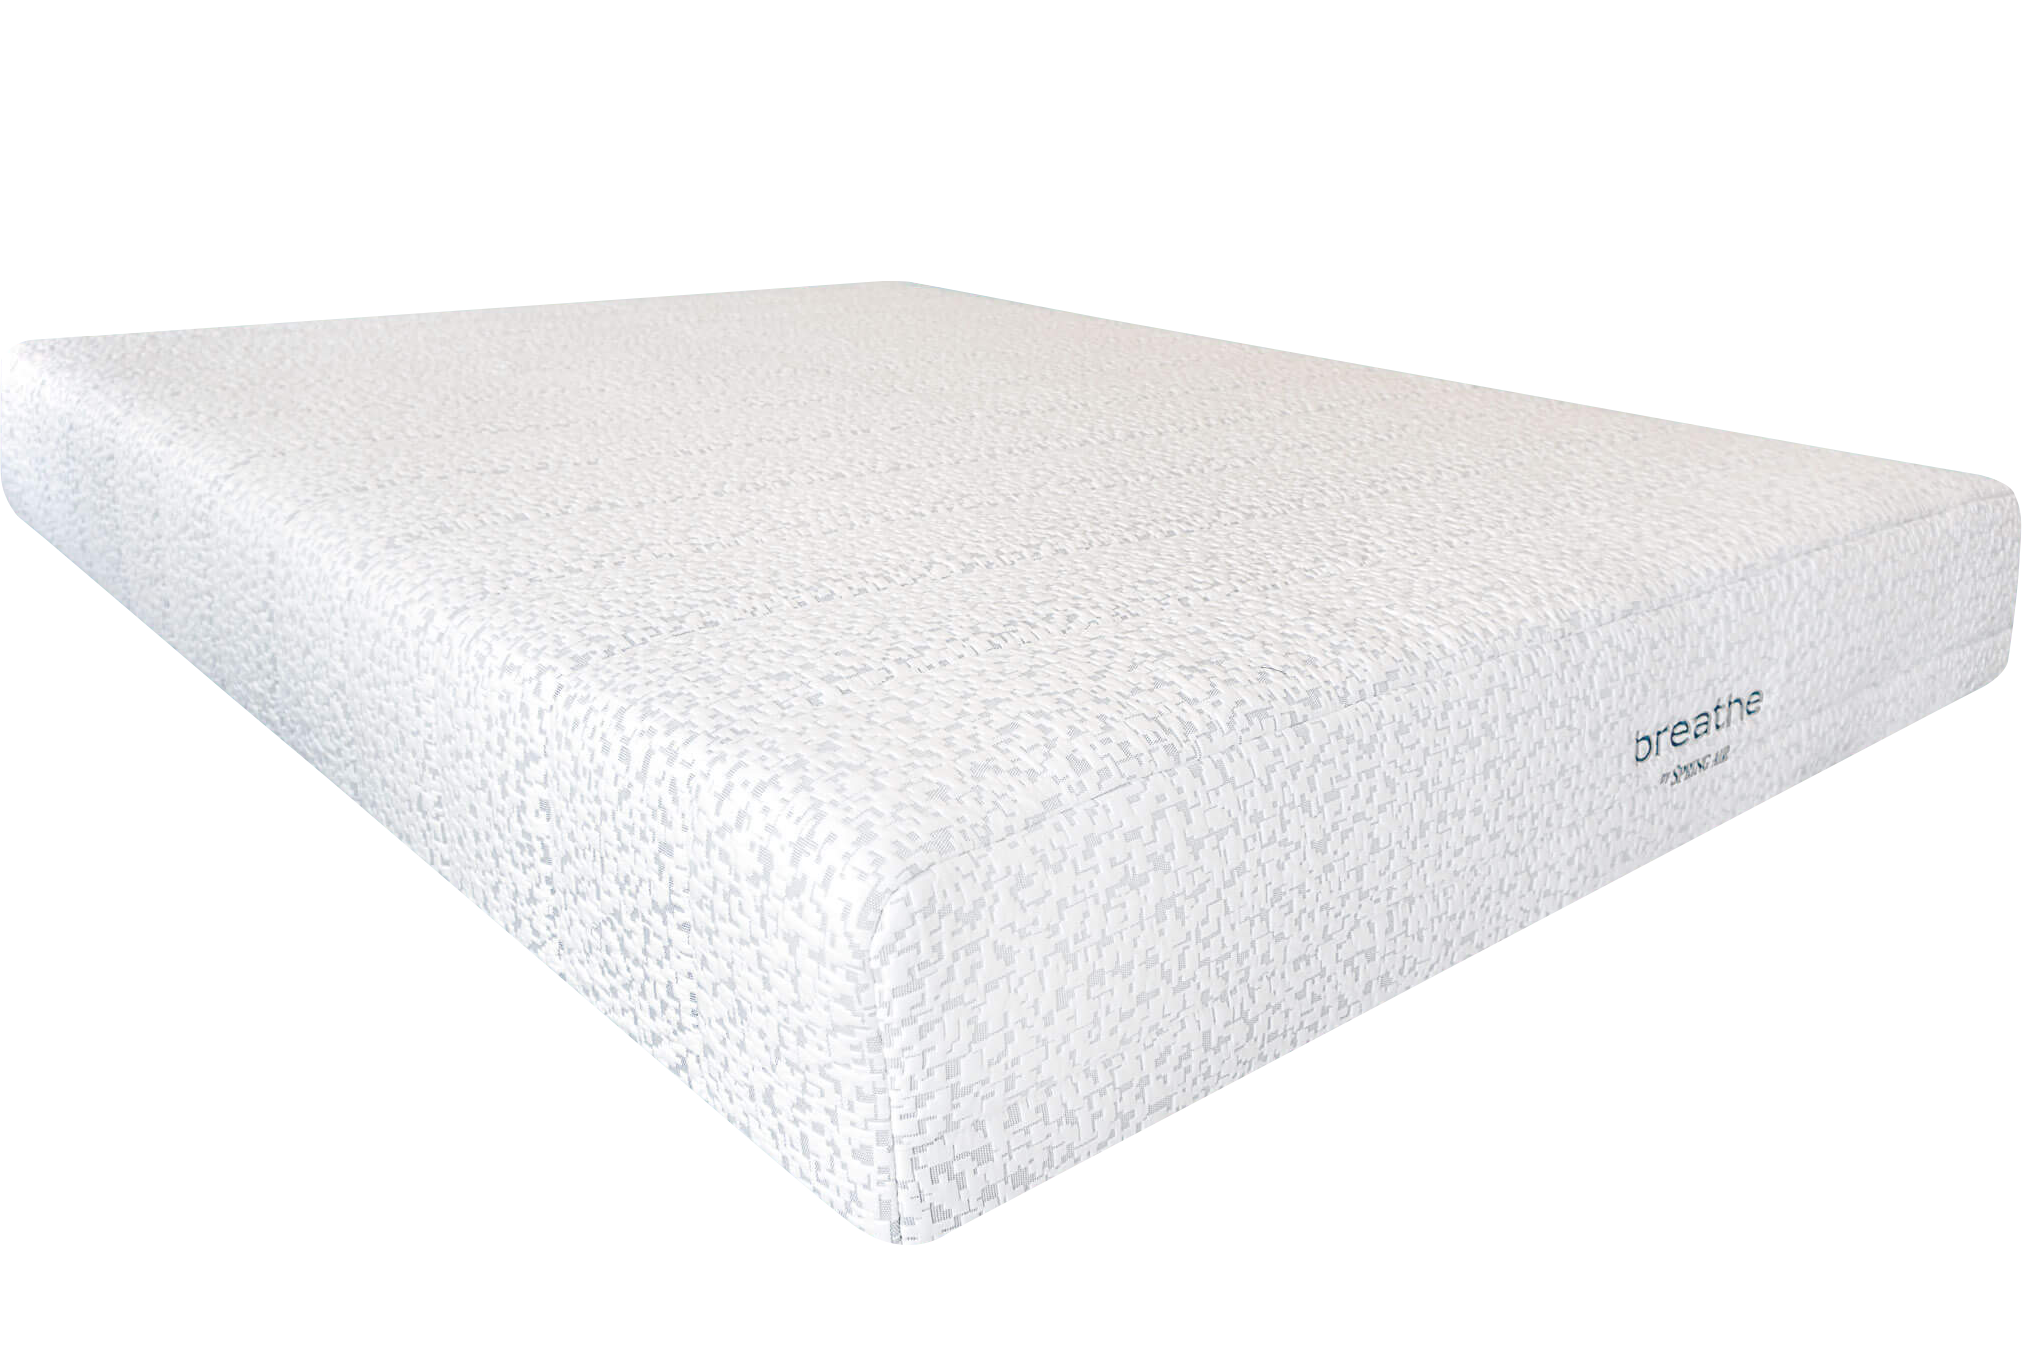 is a foam mattress ok for baby